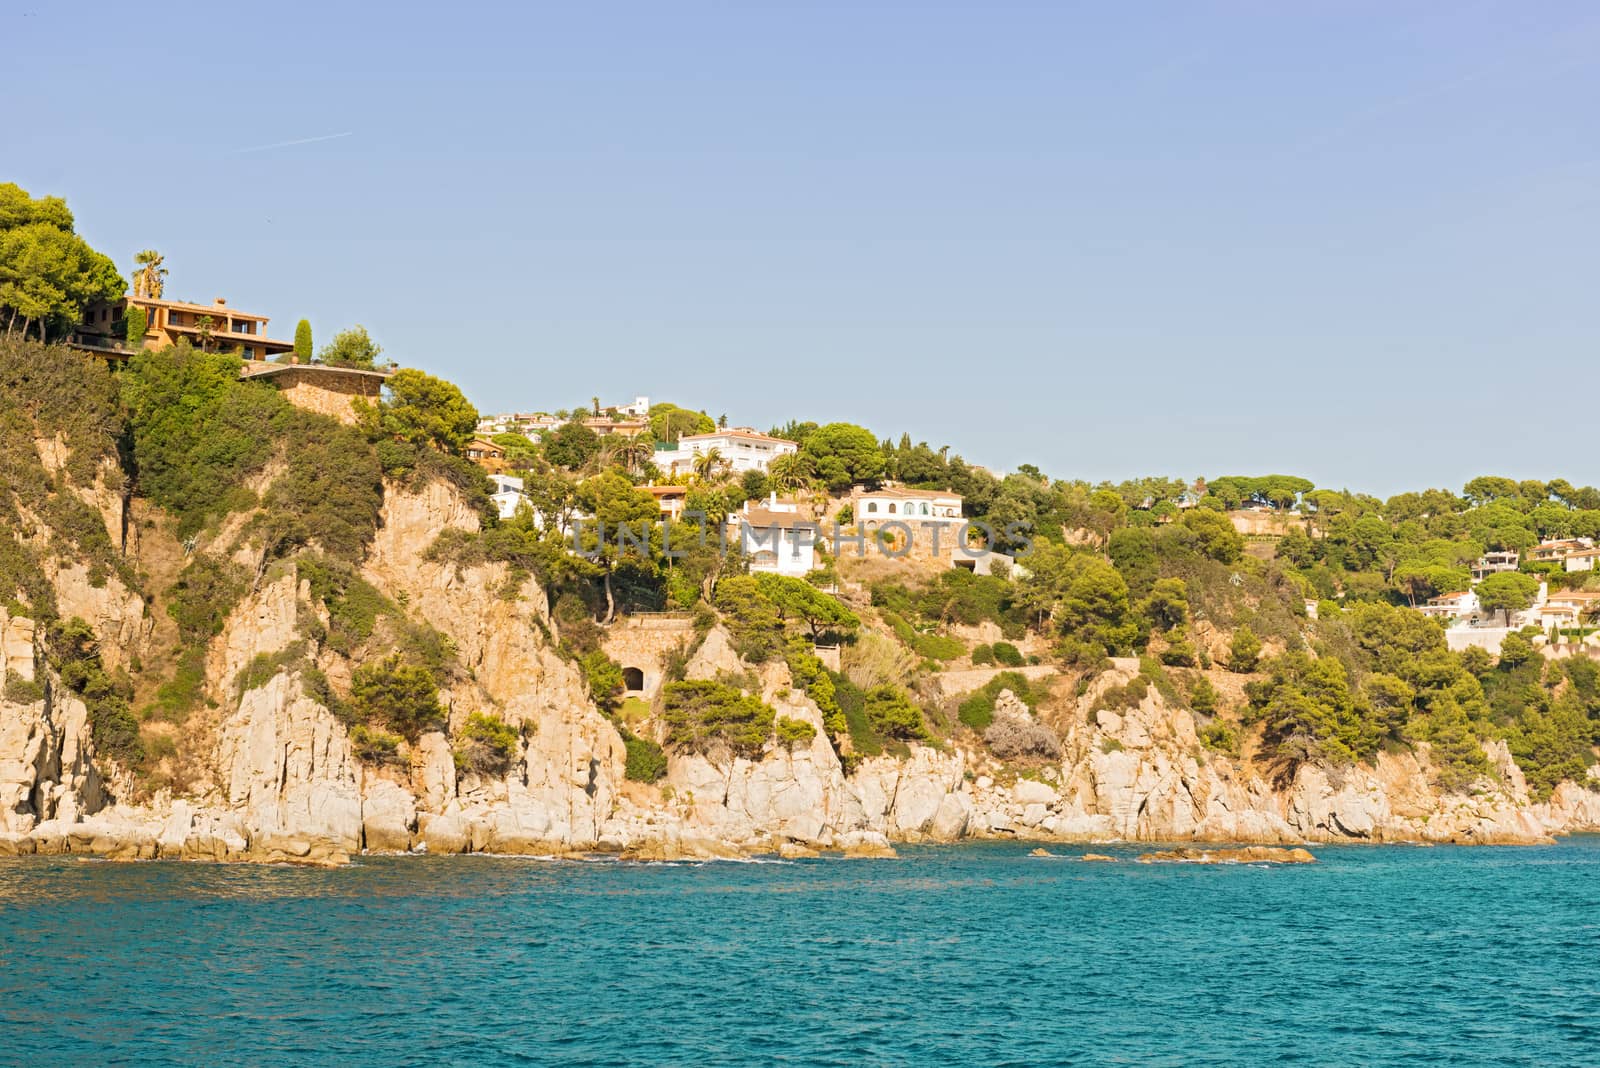 Costa Brava Cliffs in Catalonia, Spain by Marcus